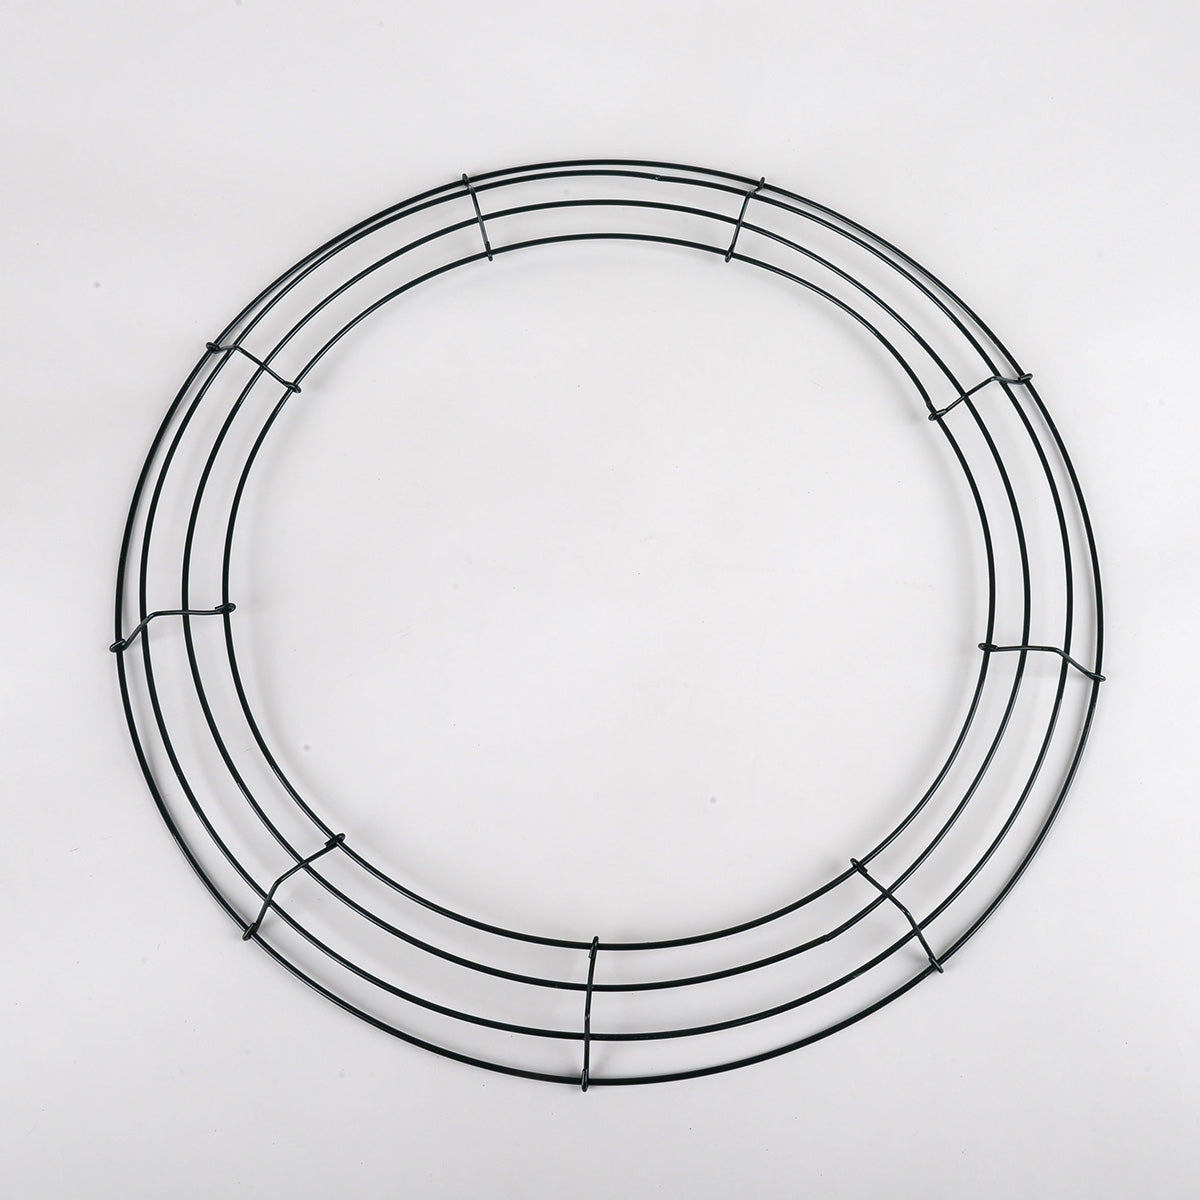 14 Inch Wreath Wire Frames - Bundle of 10pcs